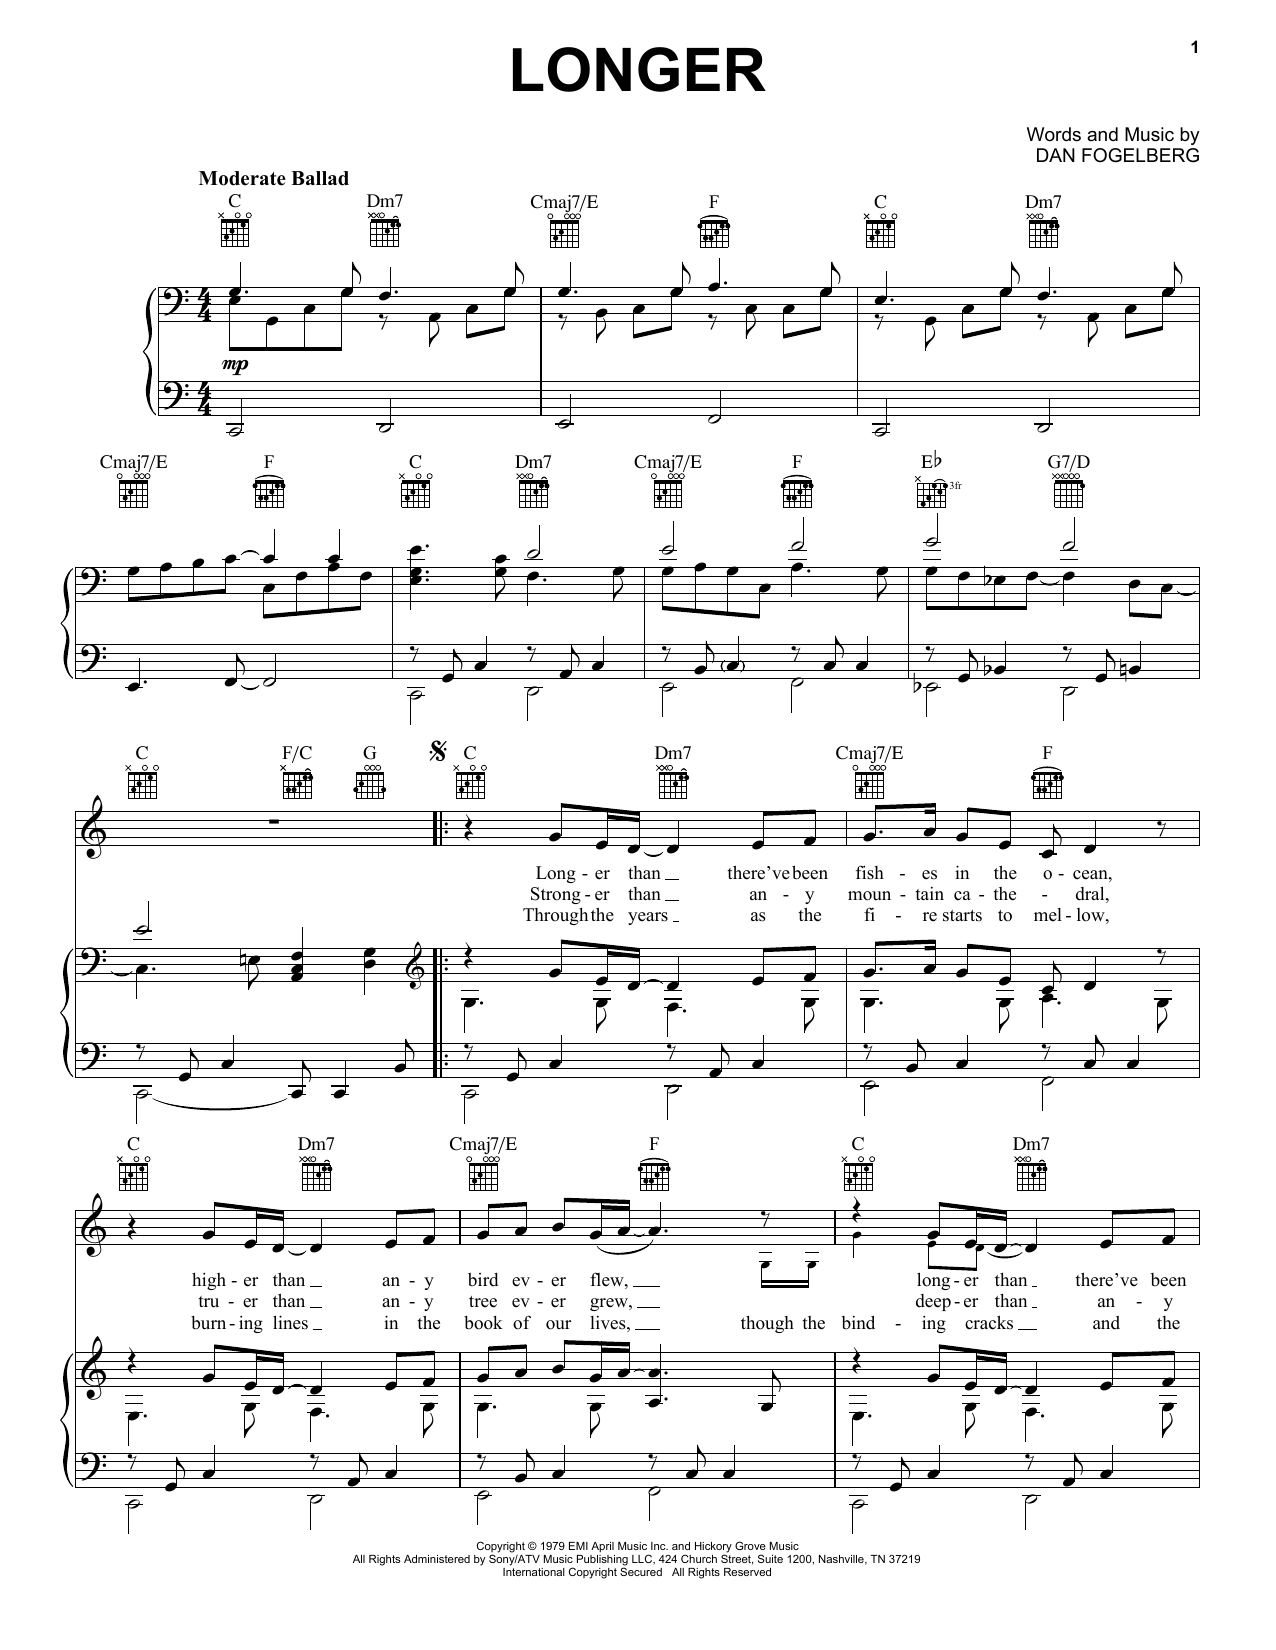 Dan Fogelberg Longer Sheet Music Notes & Chords for Lead Sheet / Fake Book - Download or Print PDF